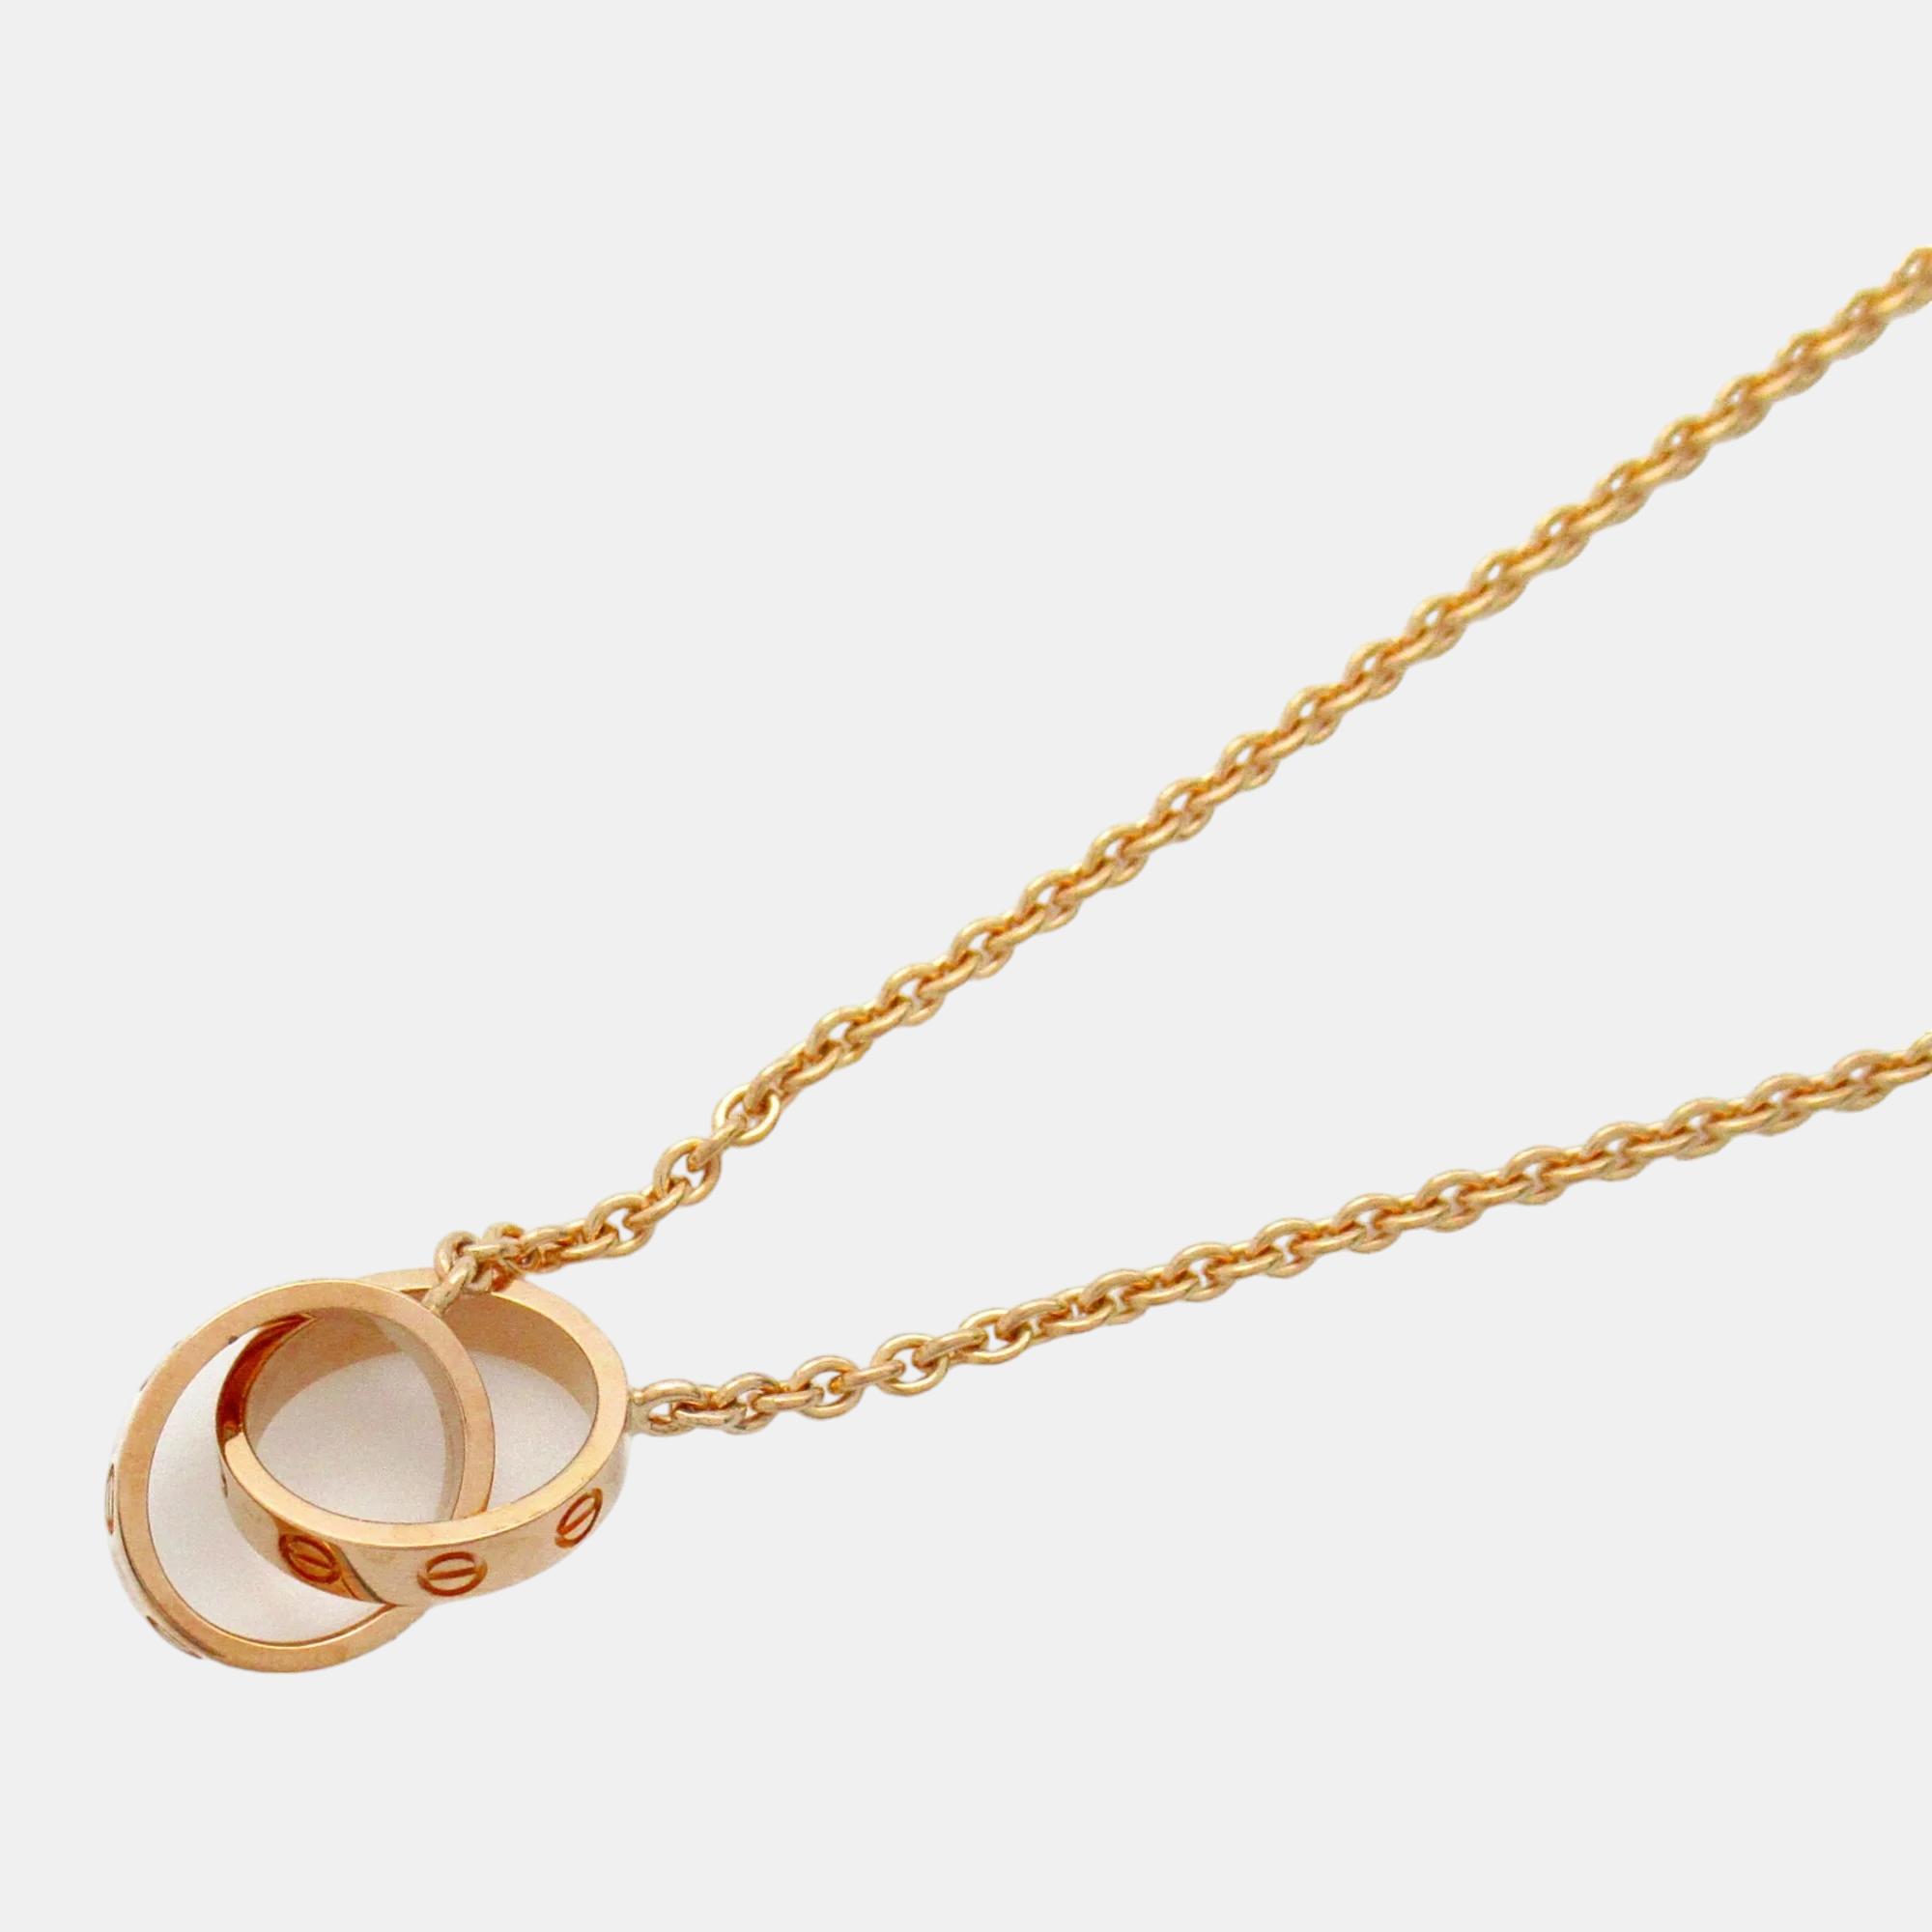 Cartier 18k rose gold love pendant necklace